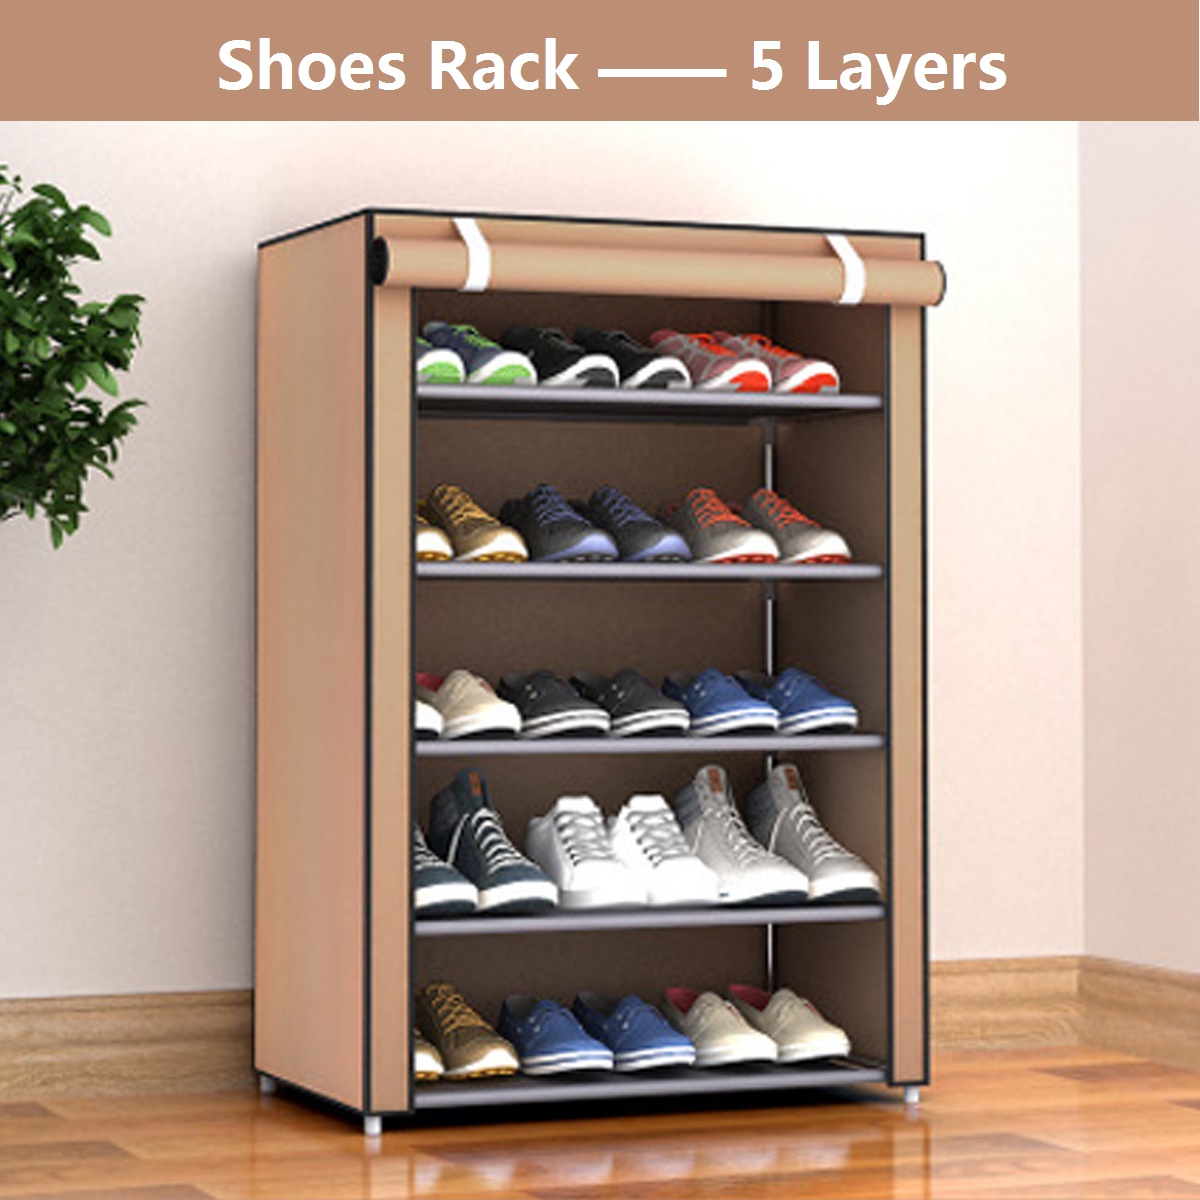 3//4//5 Layers Shoes Storage Rack Cloth Shelf Holder Organizer Space Saving Decor